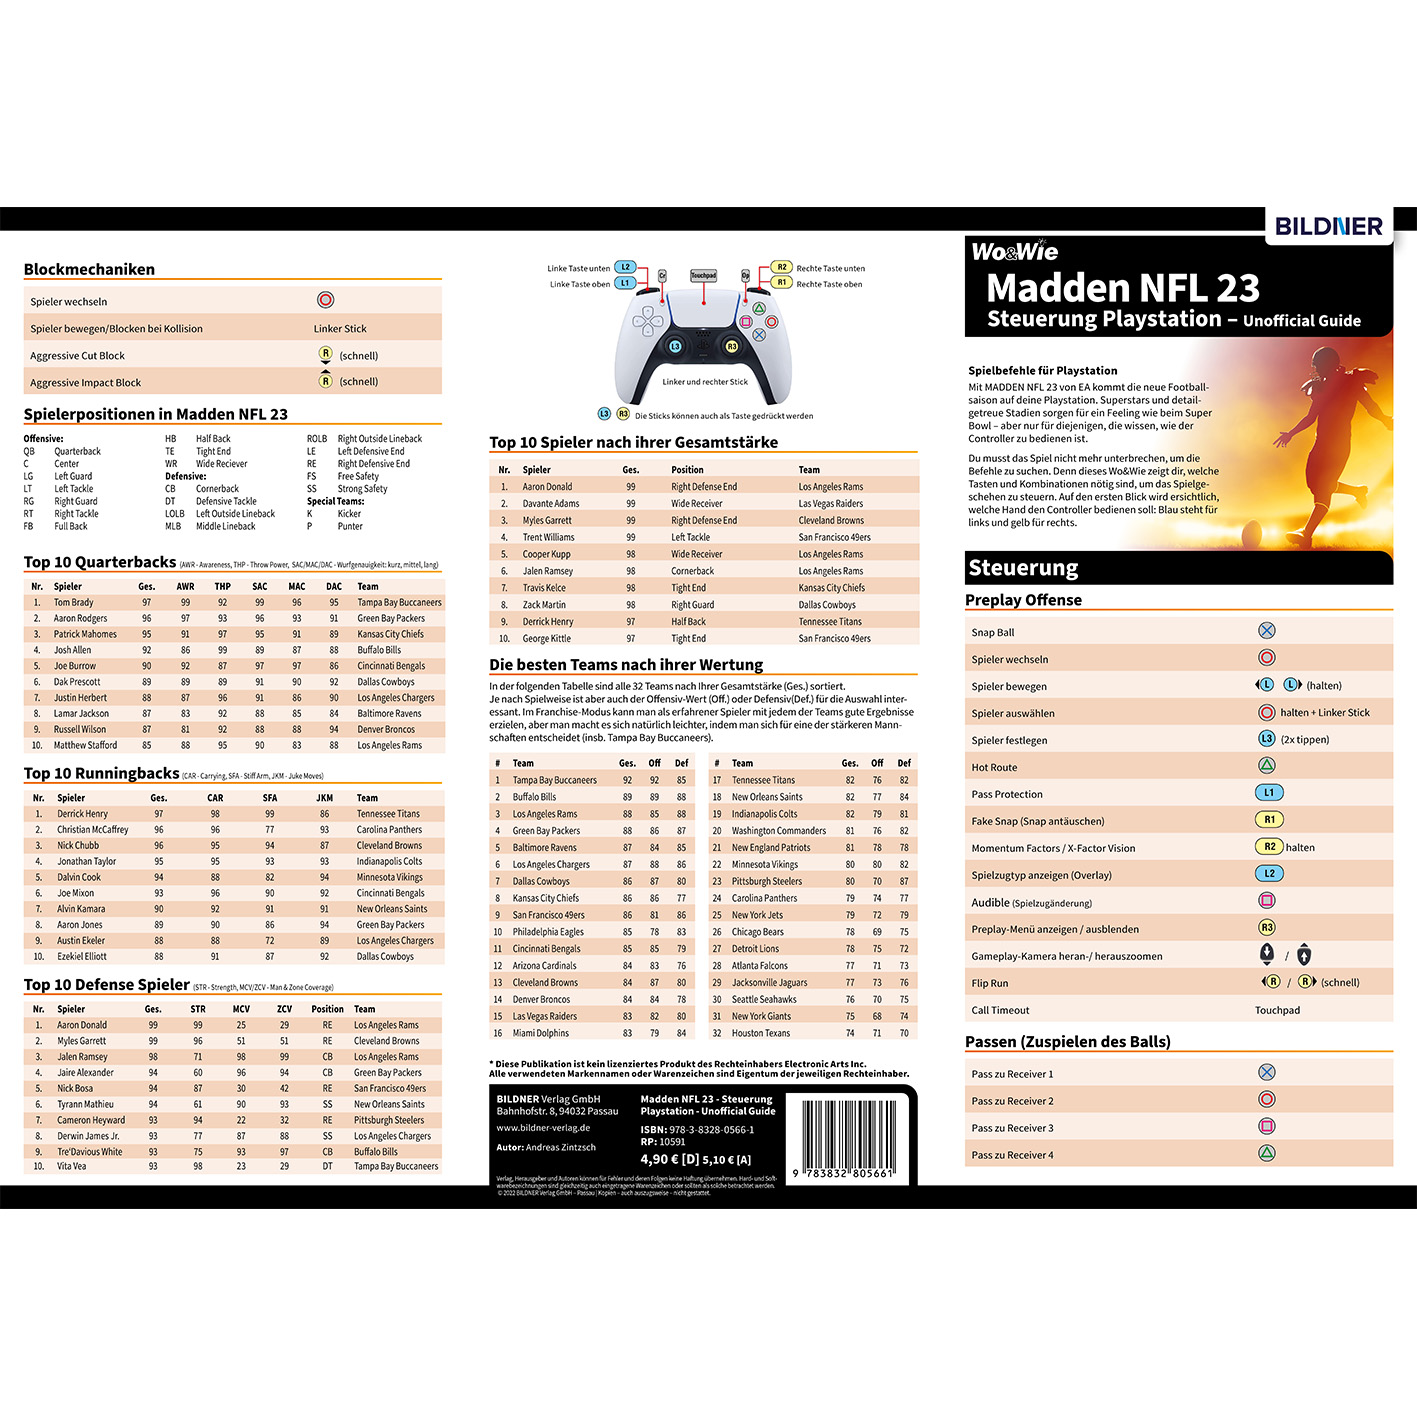 Unofficial - NFL 23 Steuerung Playstation - MADDEN Guide